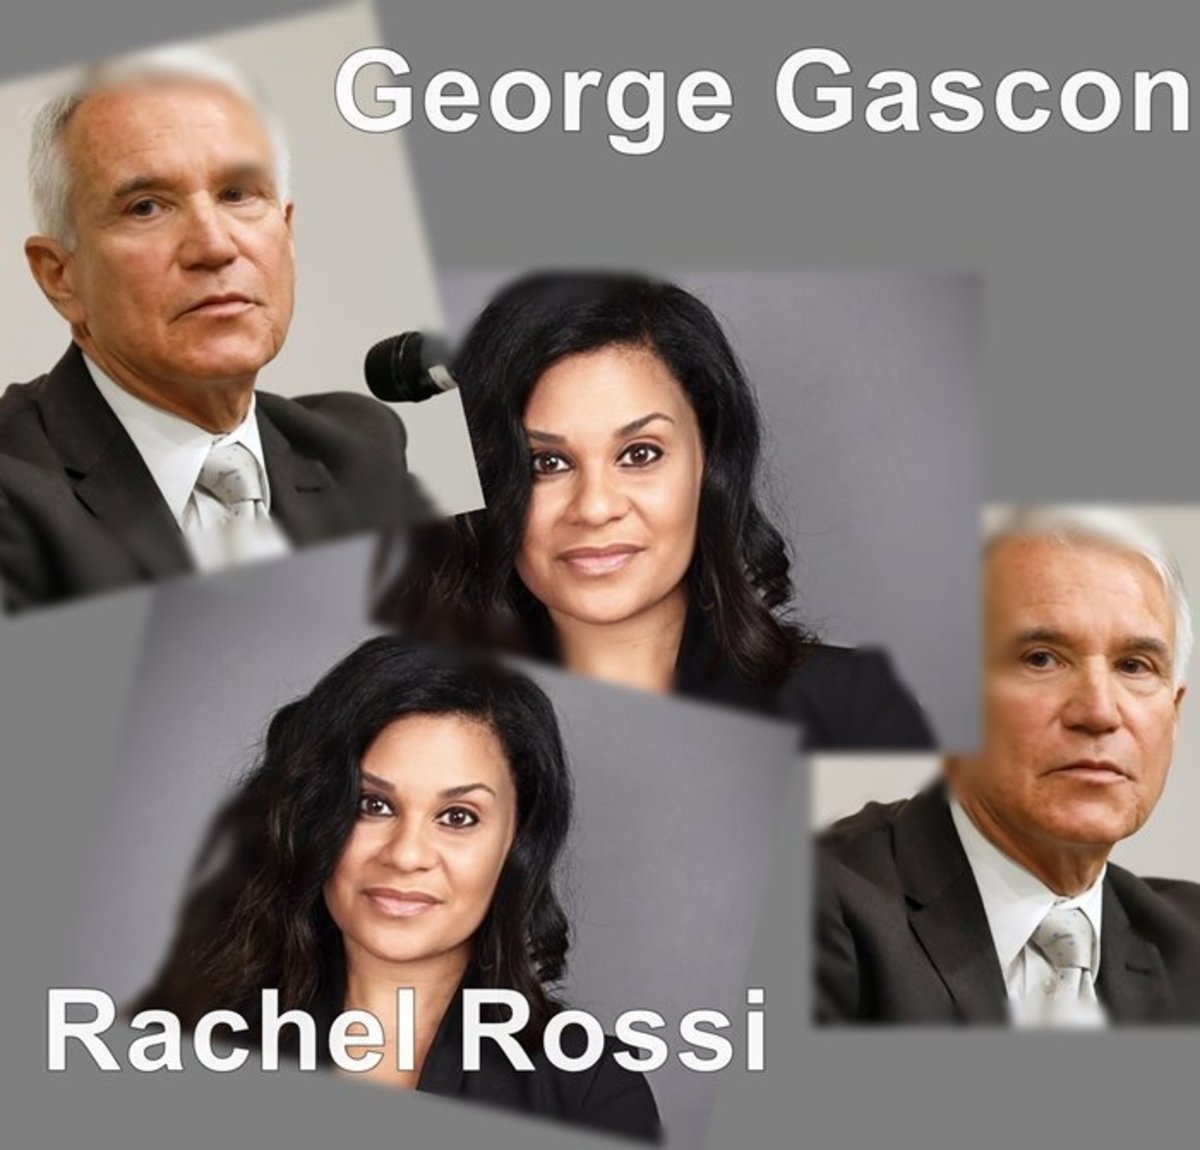 George Gascon Rachel Rossi